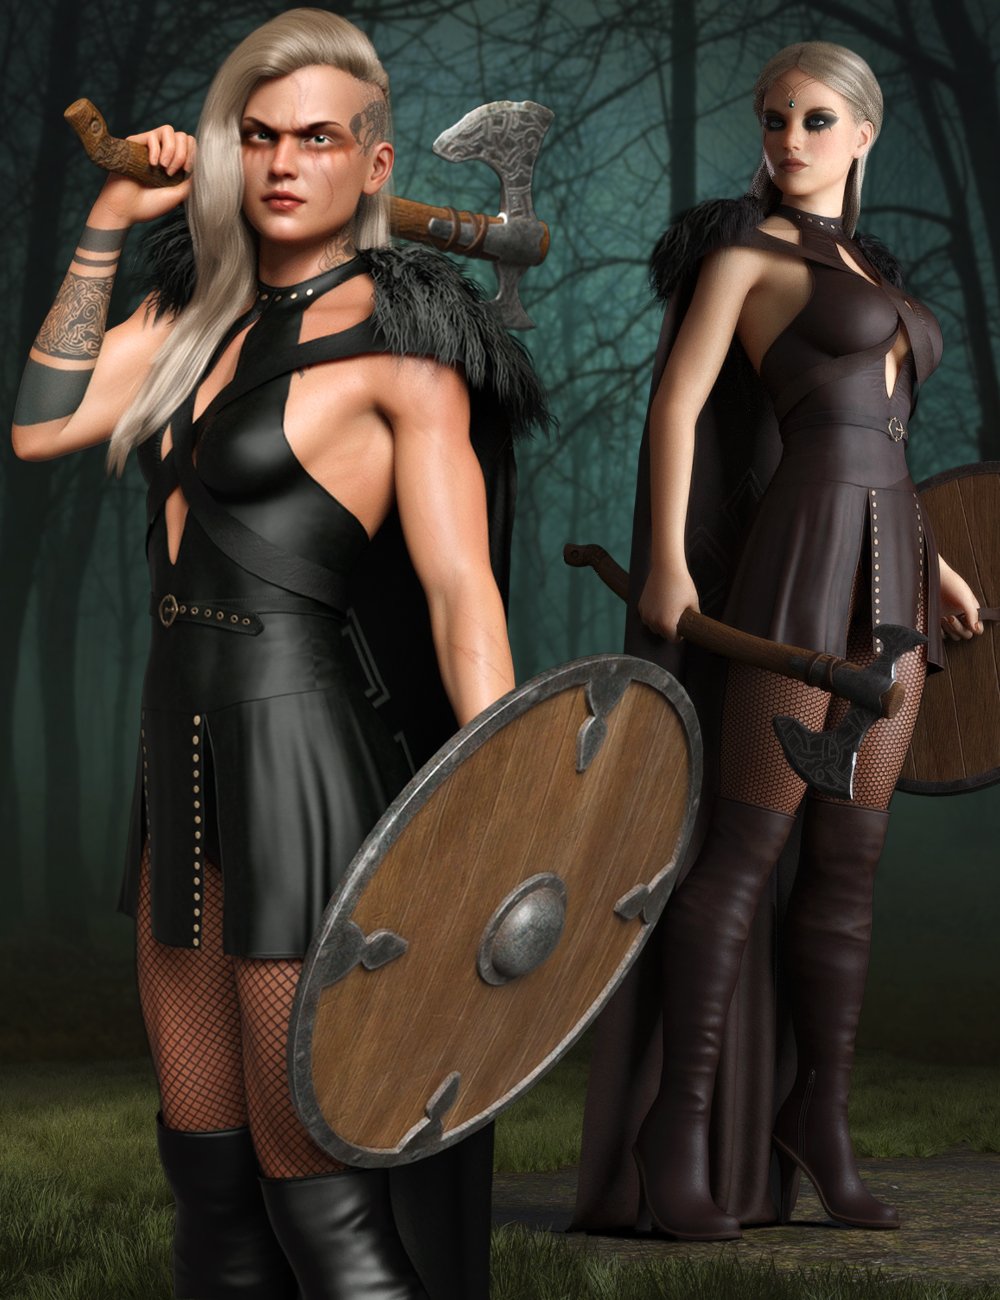 dForce Viking Princess Outfit Set for Genesis 8 and 8.1 Females by: Mytilus3dLab, 3D Models by Daz 3D